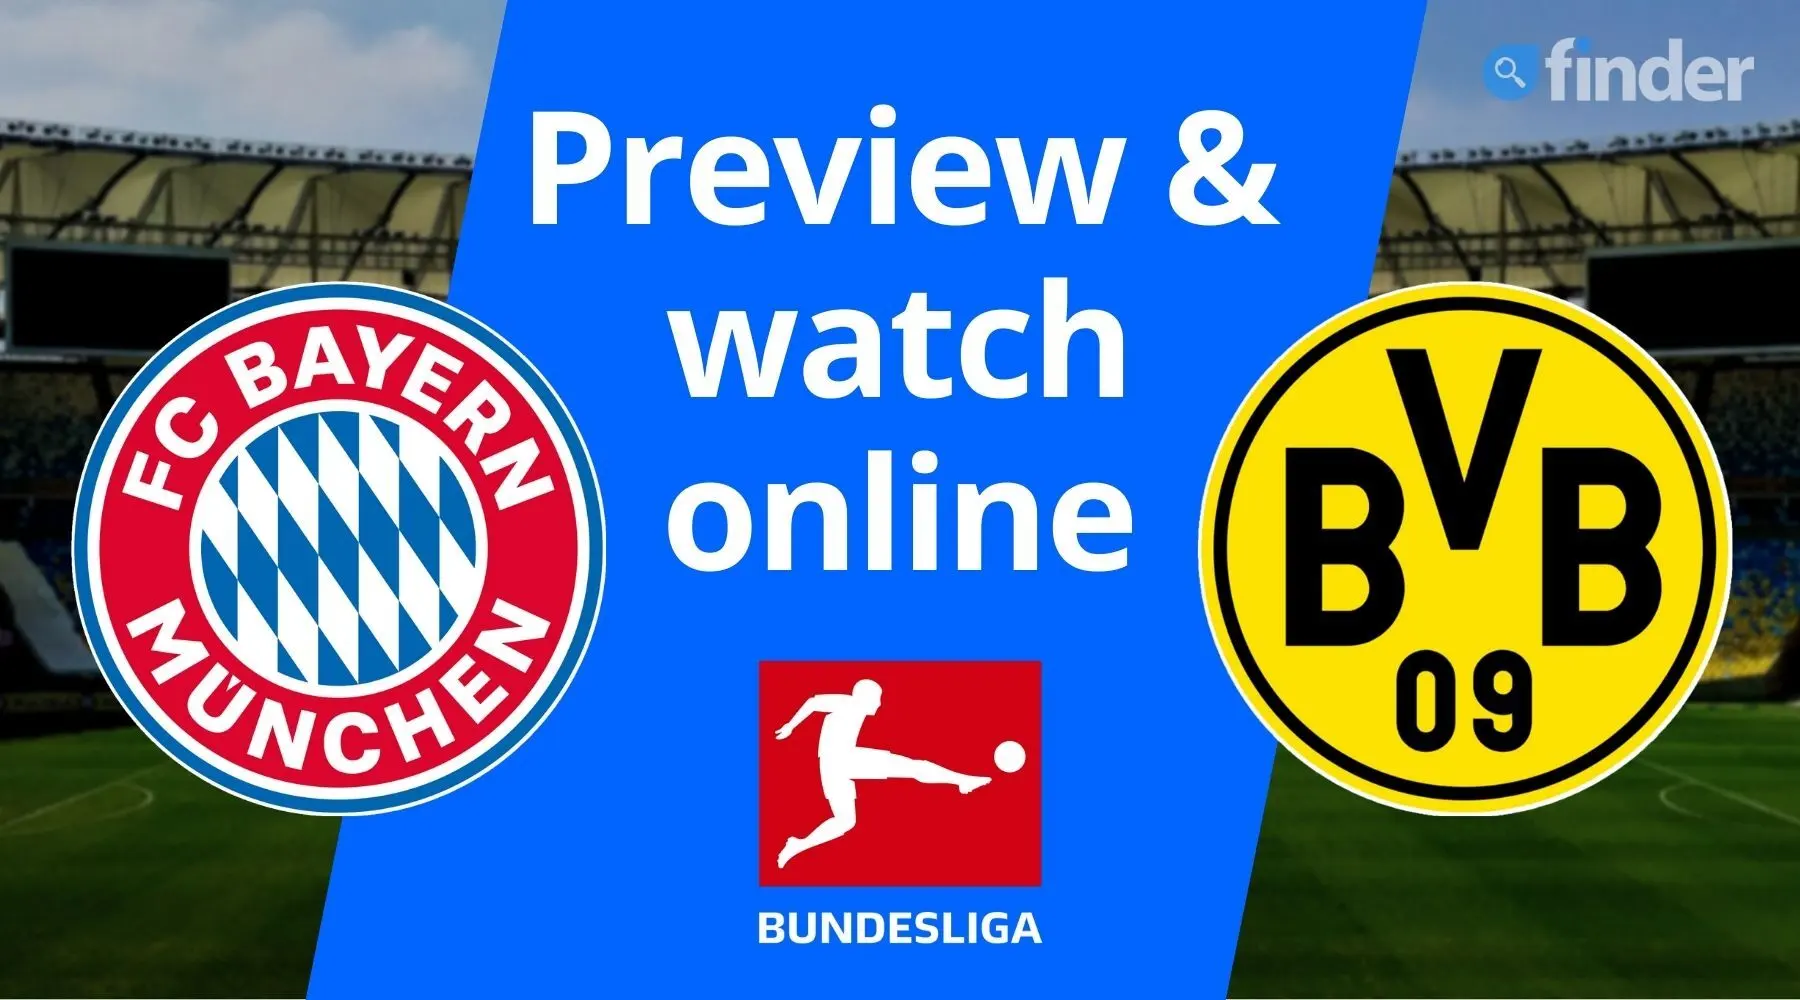 How to watch Dortmund vs Bayern Bundesliga in Australia Finder